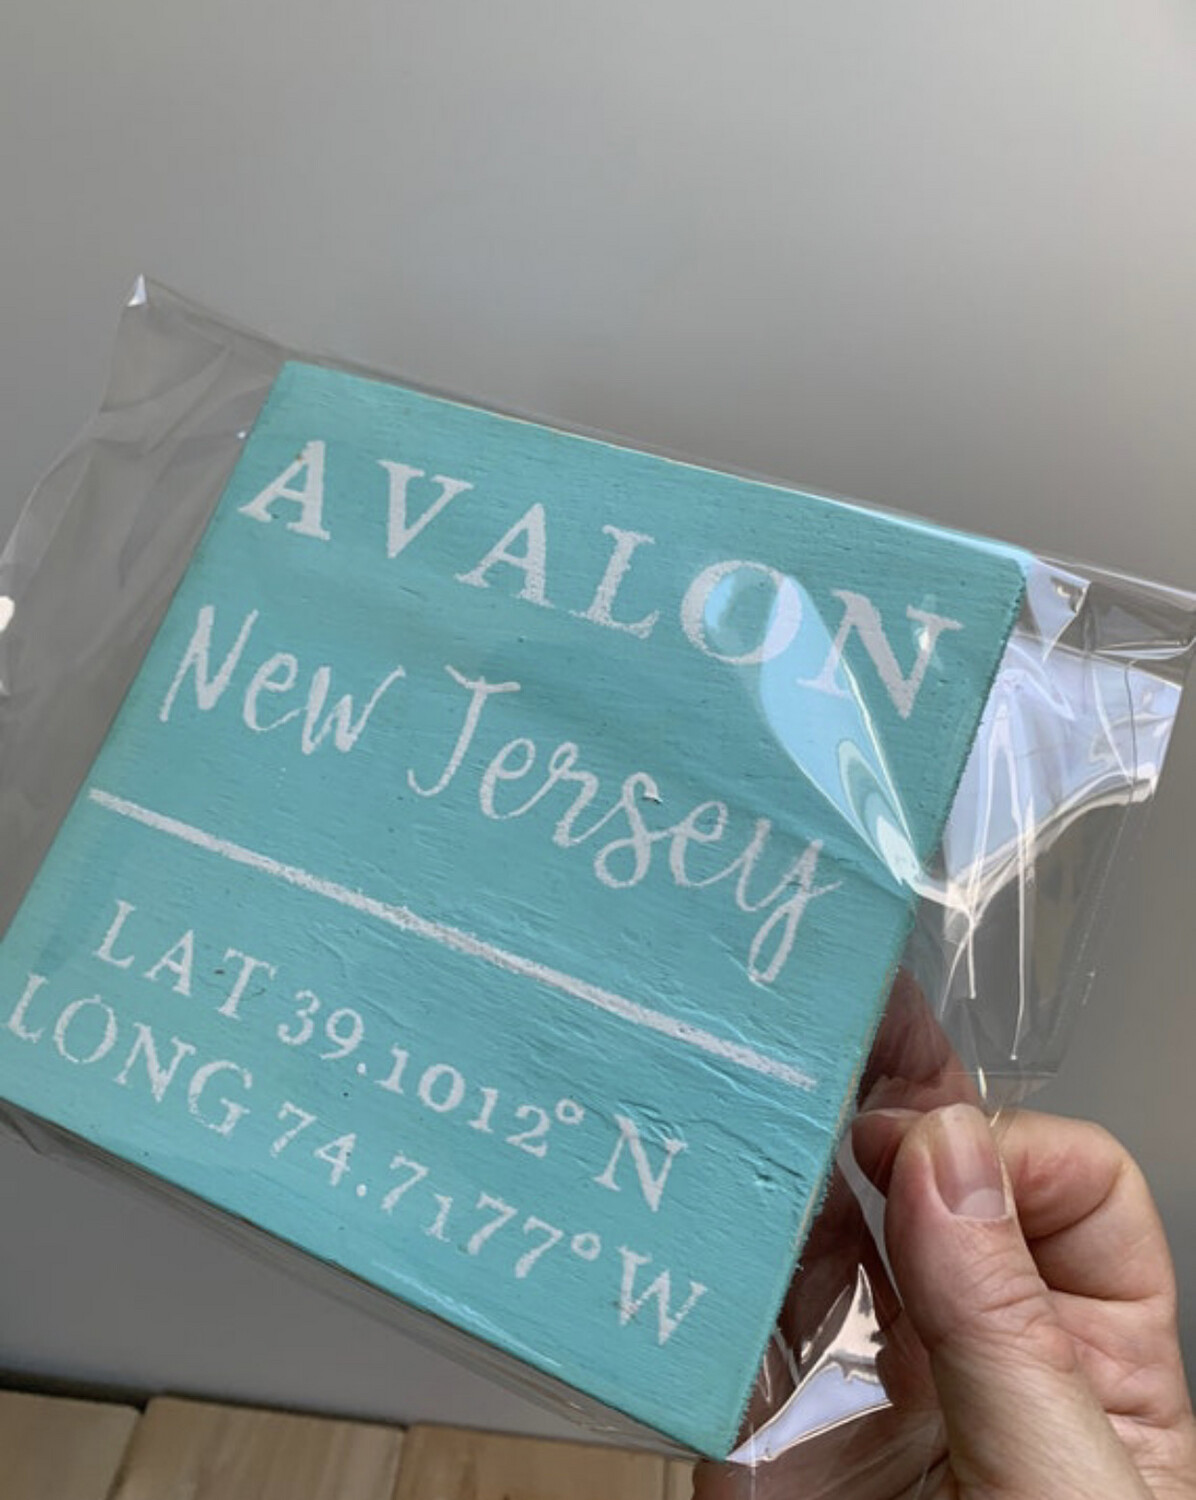 Rustic Wood Avalon NJ Sign - GPS Coordinates Sign - Latitude Longitude Avalon New Jersey Sign